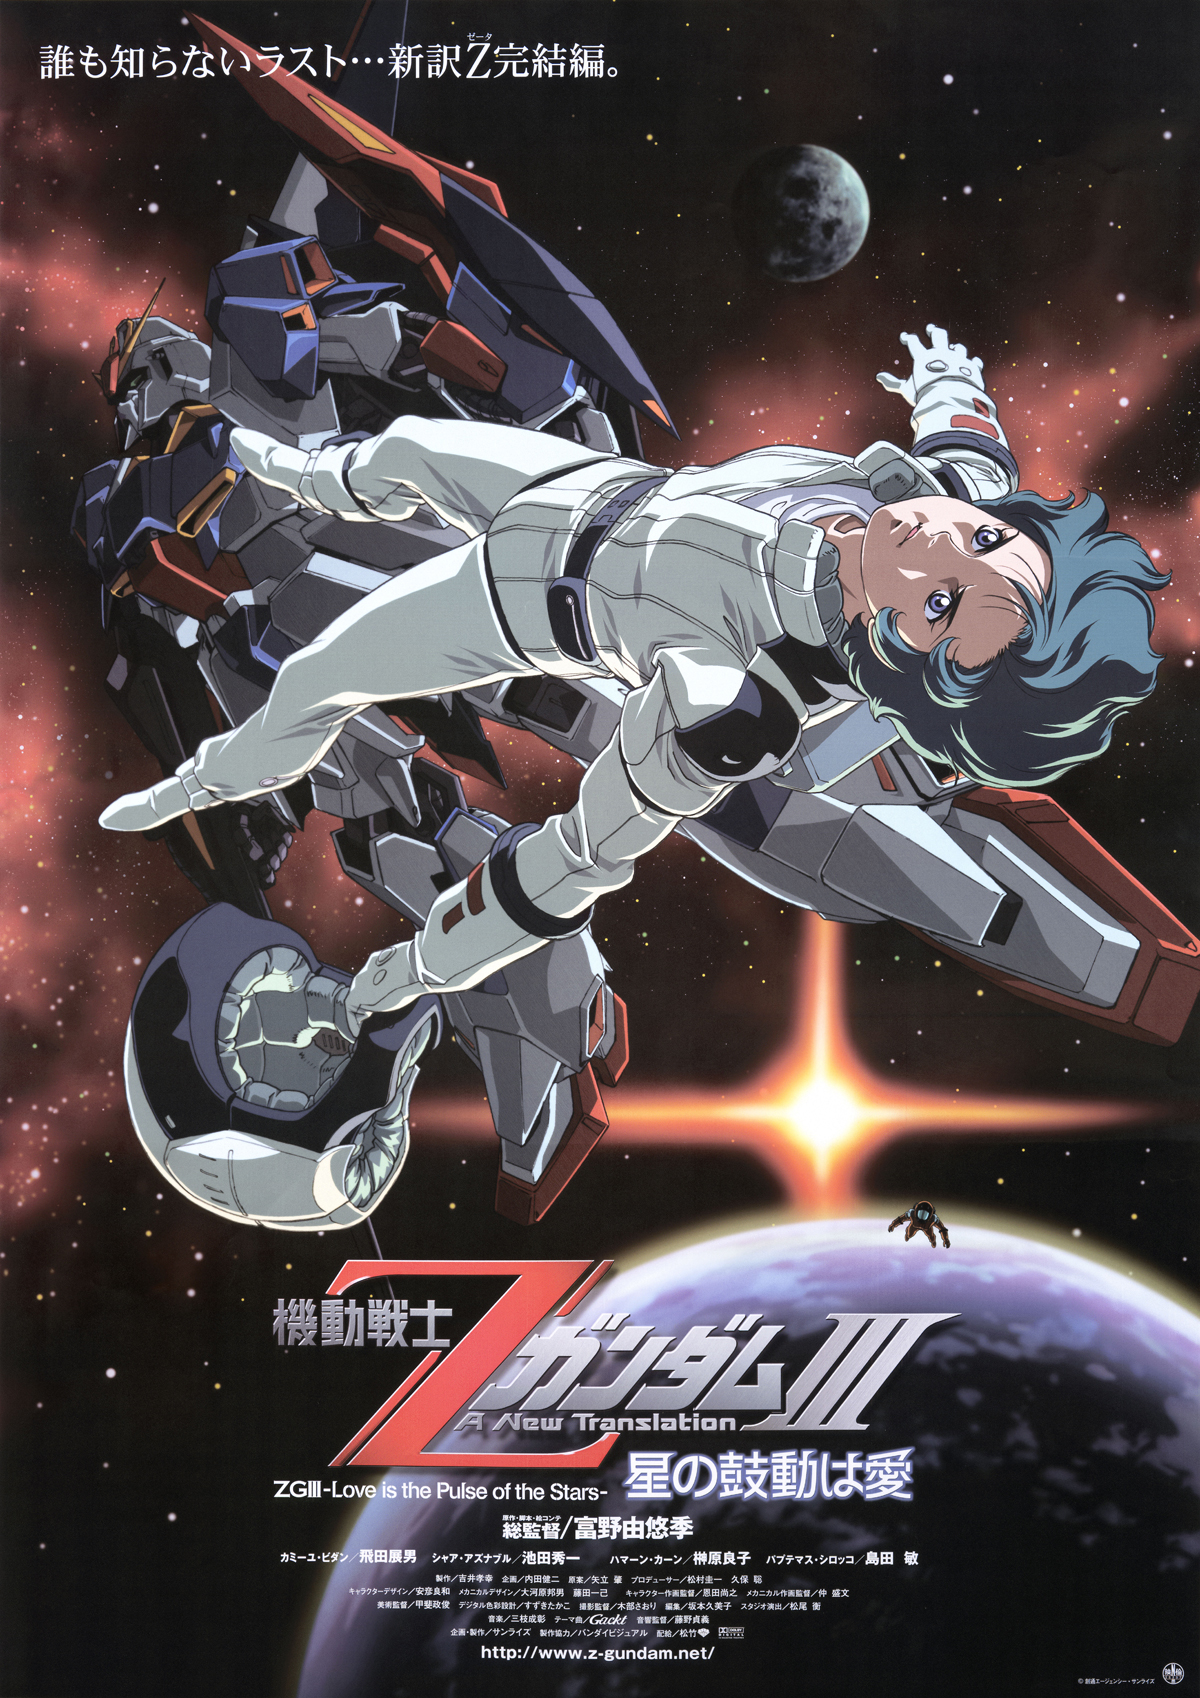 Mobile Suit Zeta Gundam: a New Translation Coll [Blu-ray] [Import]